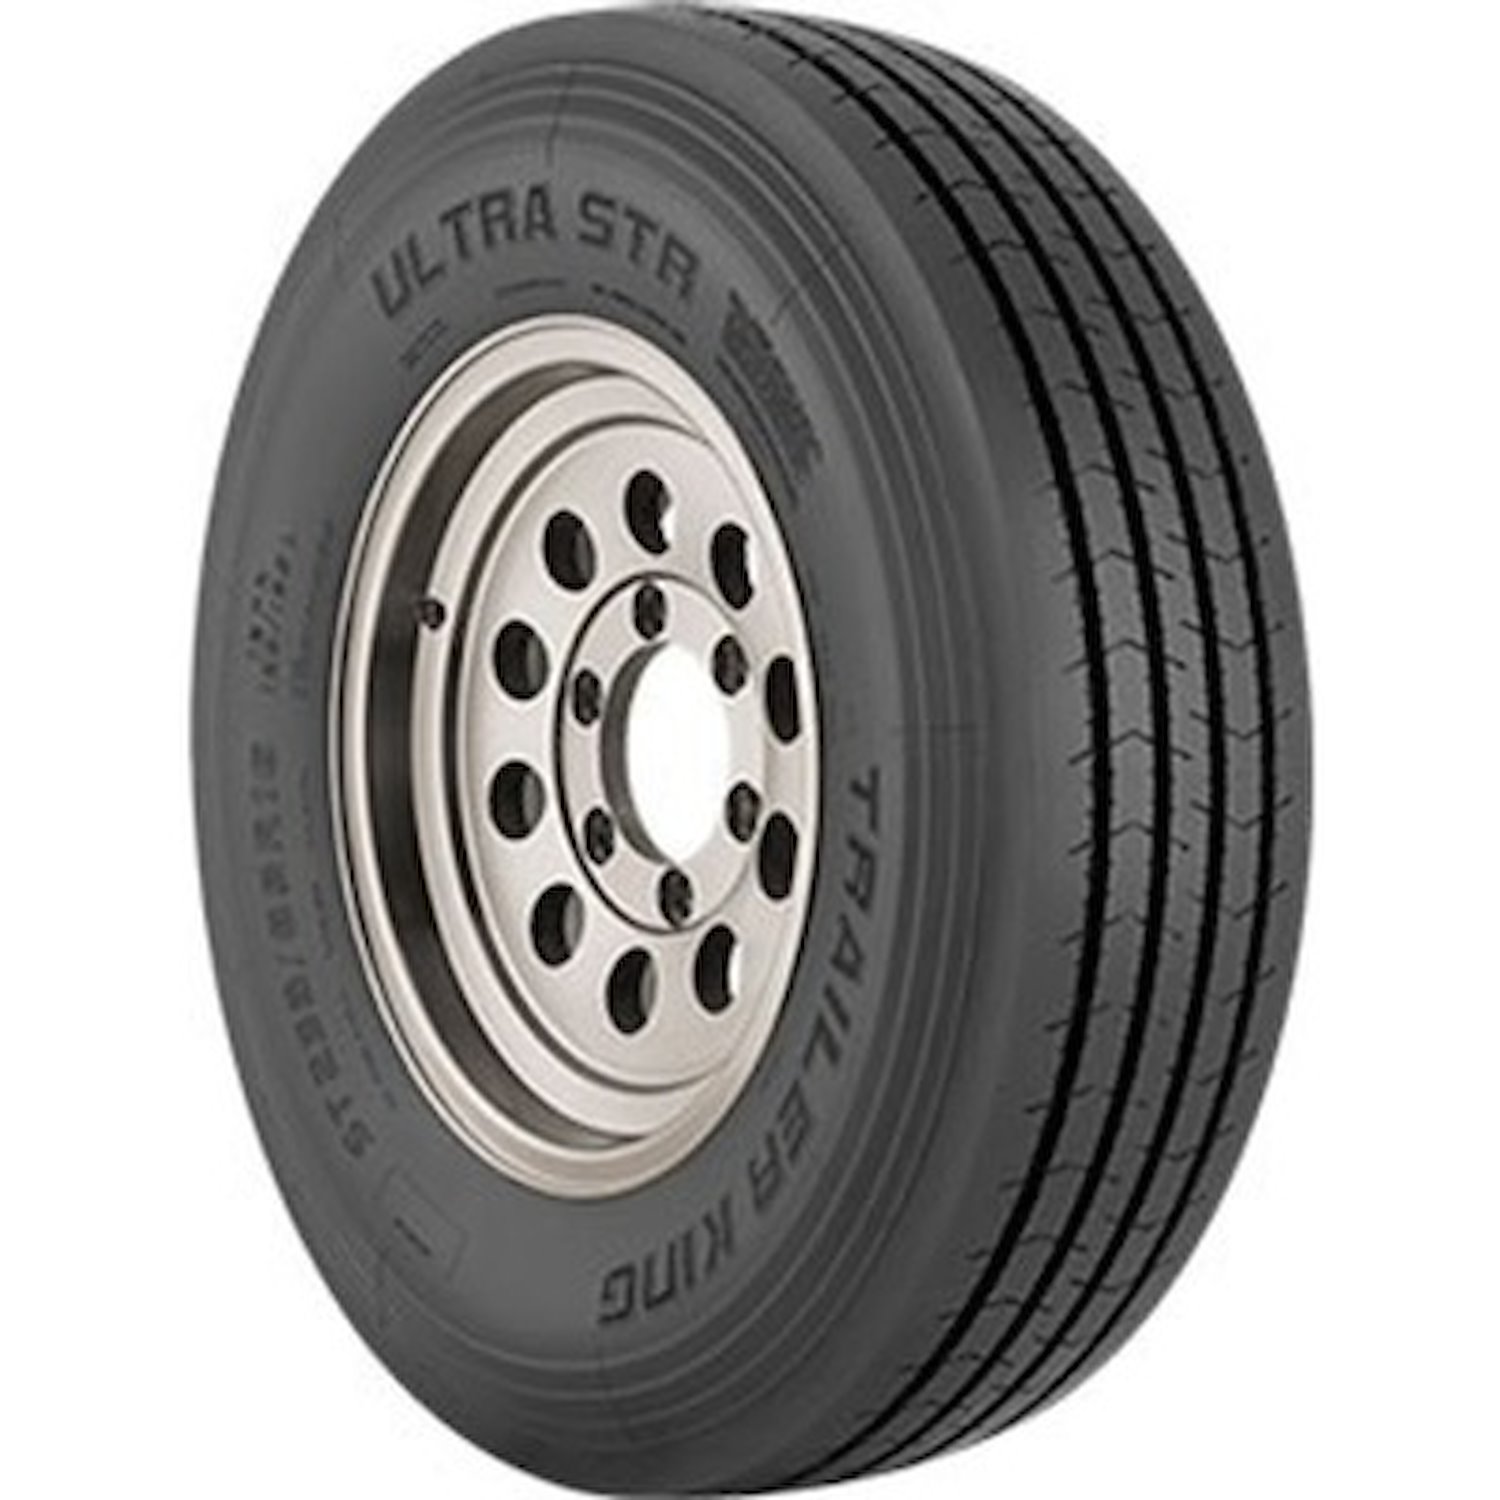 TKAS25G Trailer King Ultra STR Tire, 235/80R16